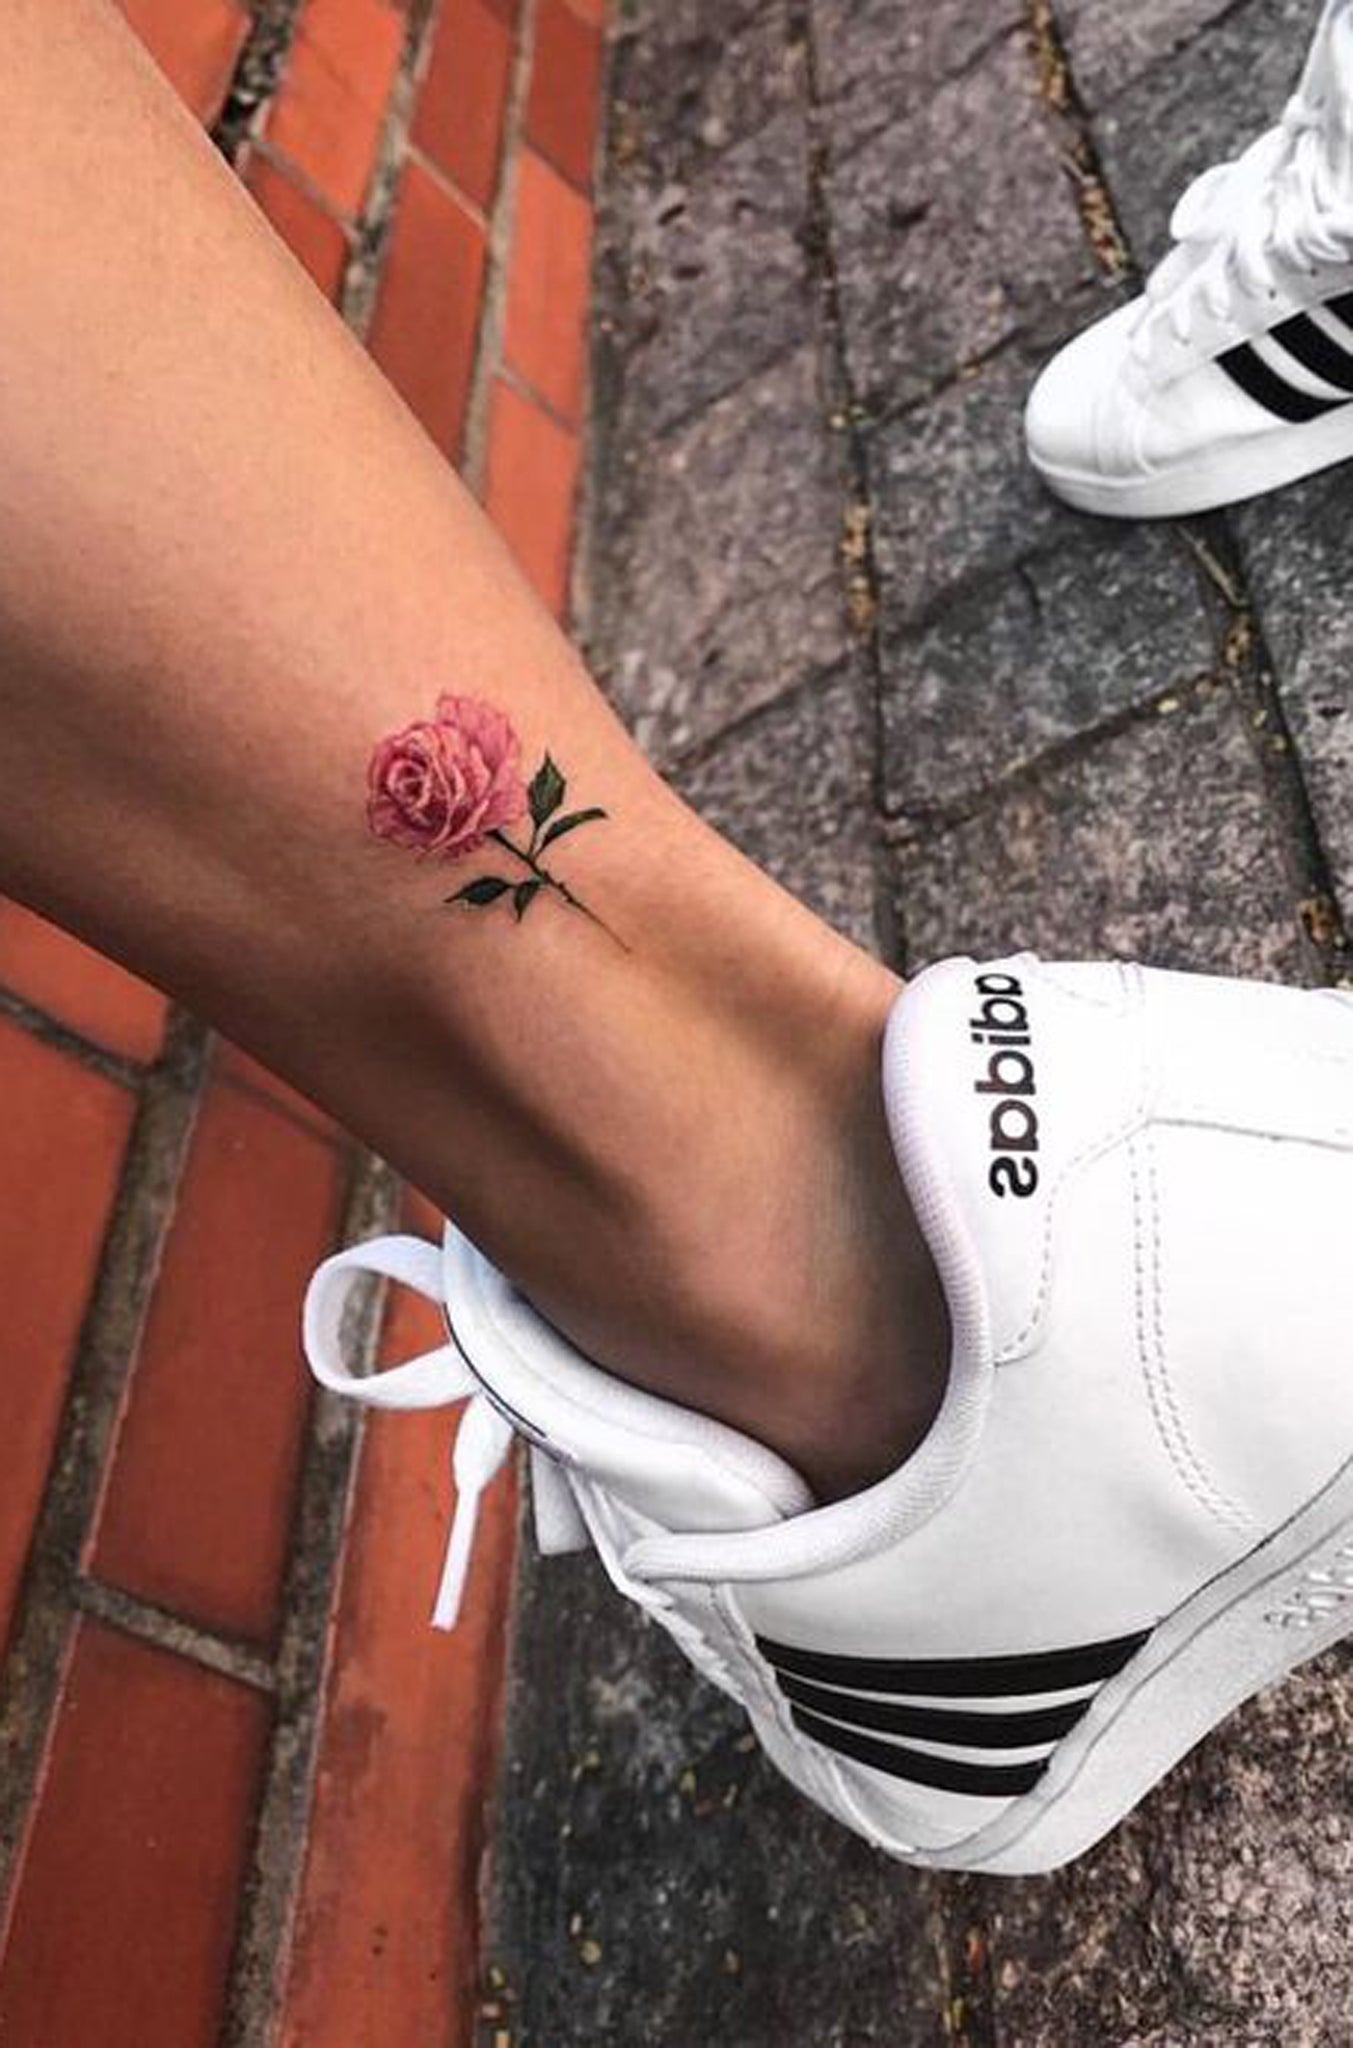 Watercolor Rose Ankle Tattoo Ideas for Women - Pretty Feminine Floral Flower Leg Tatouage - Ideas Del Tatuaje - www.MyBodiArt.com 